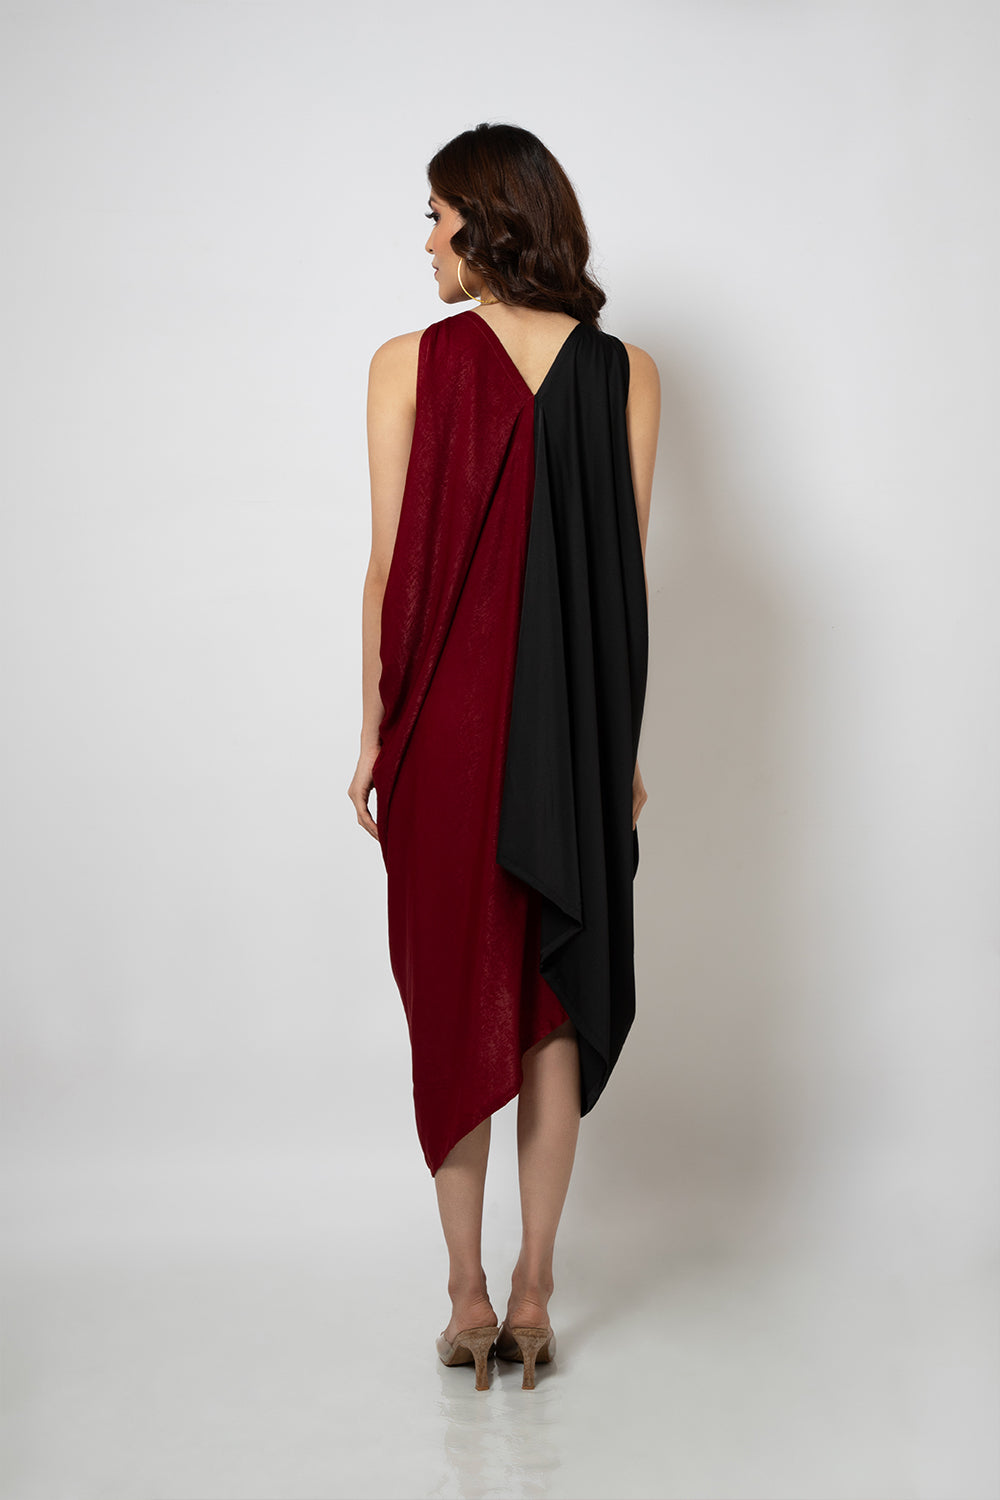 93. Asymmetrical silk blend half red and half black dress